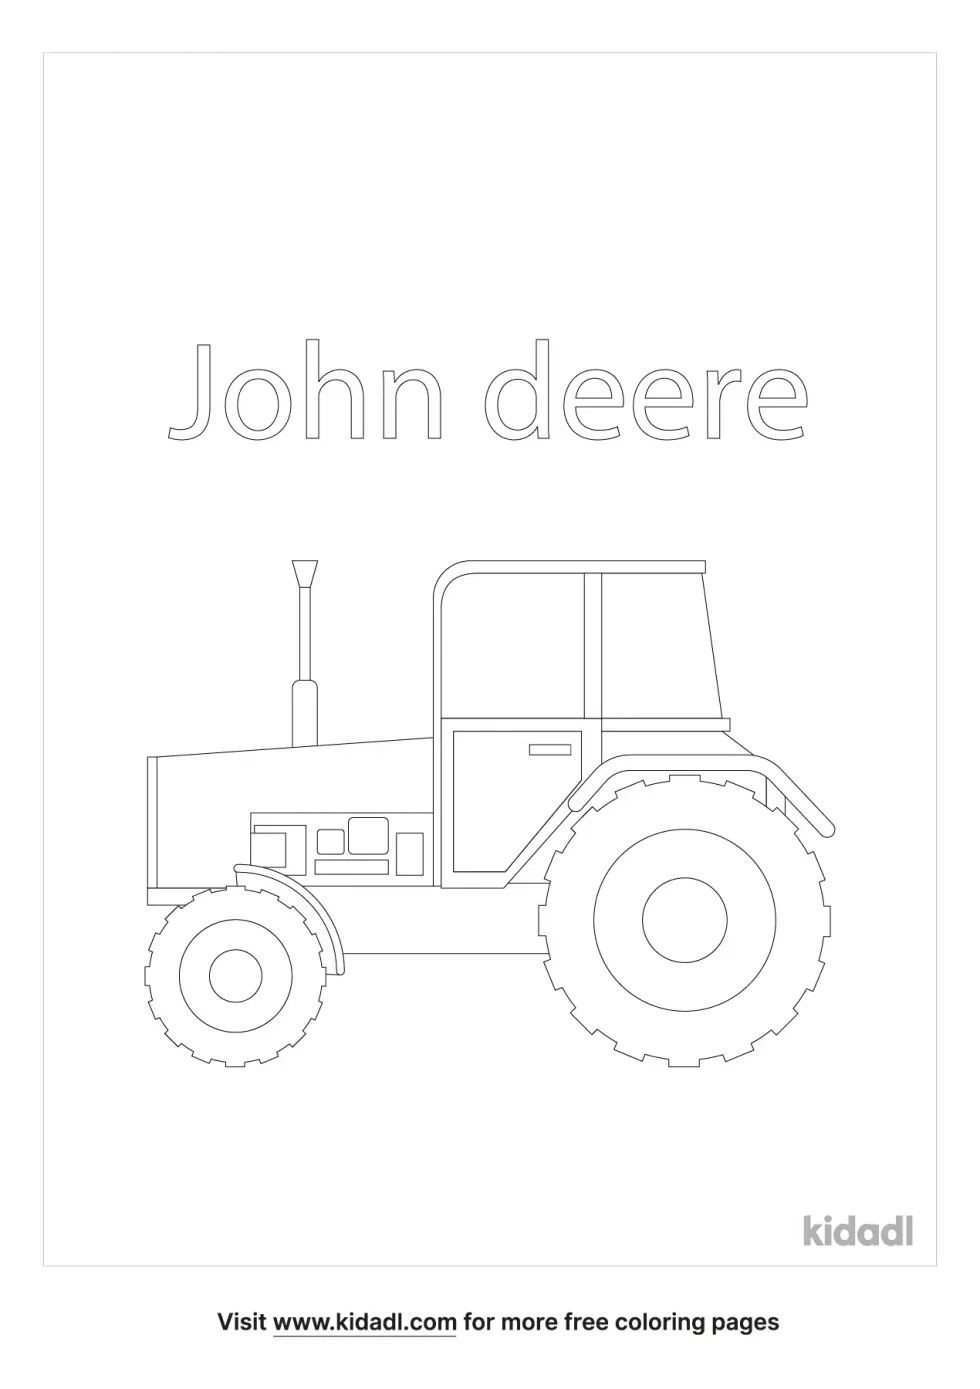 John Deere Coloring Page